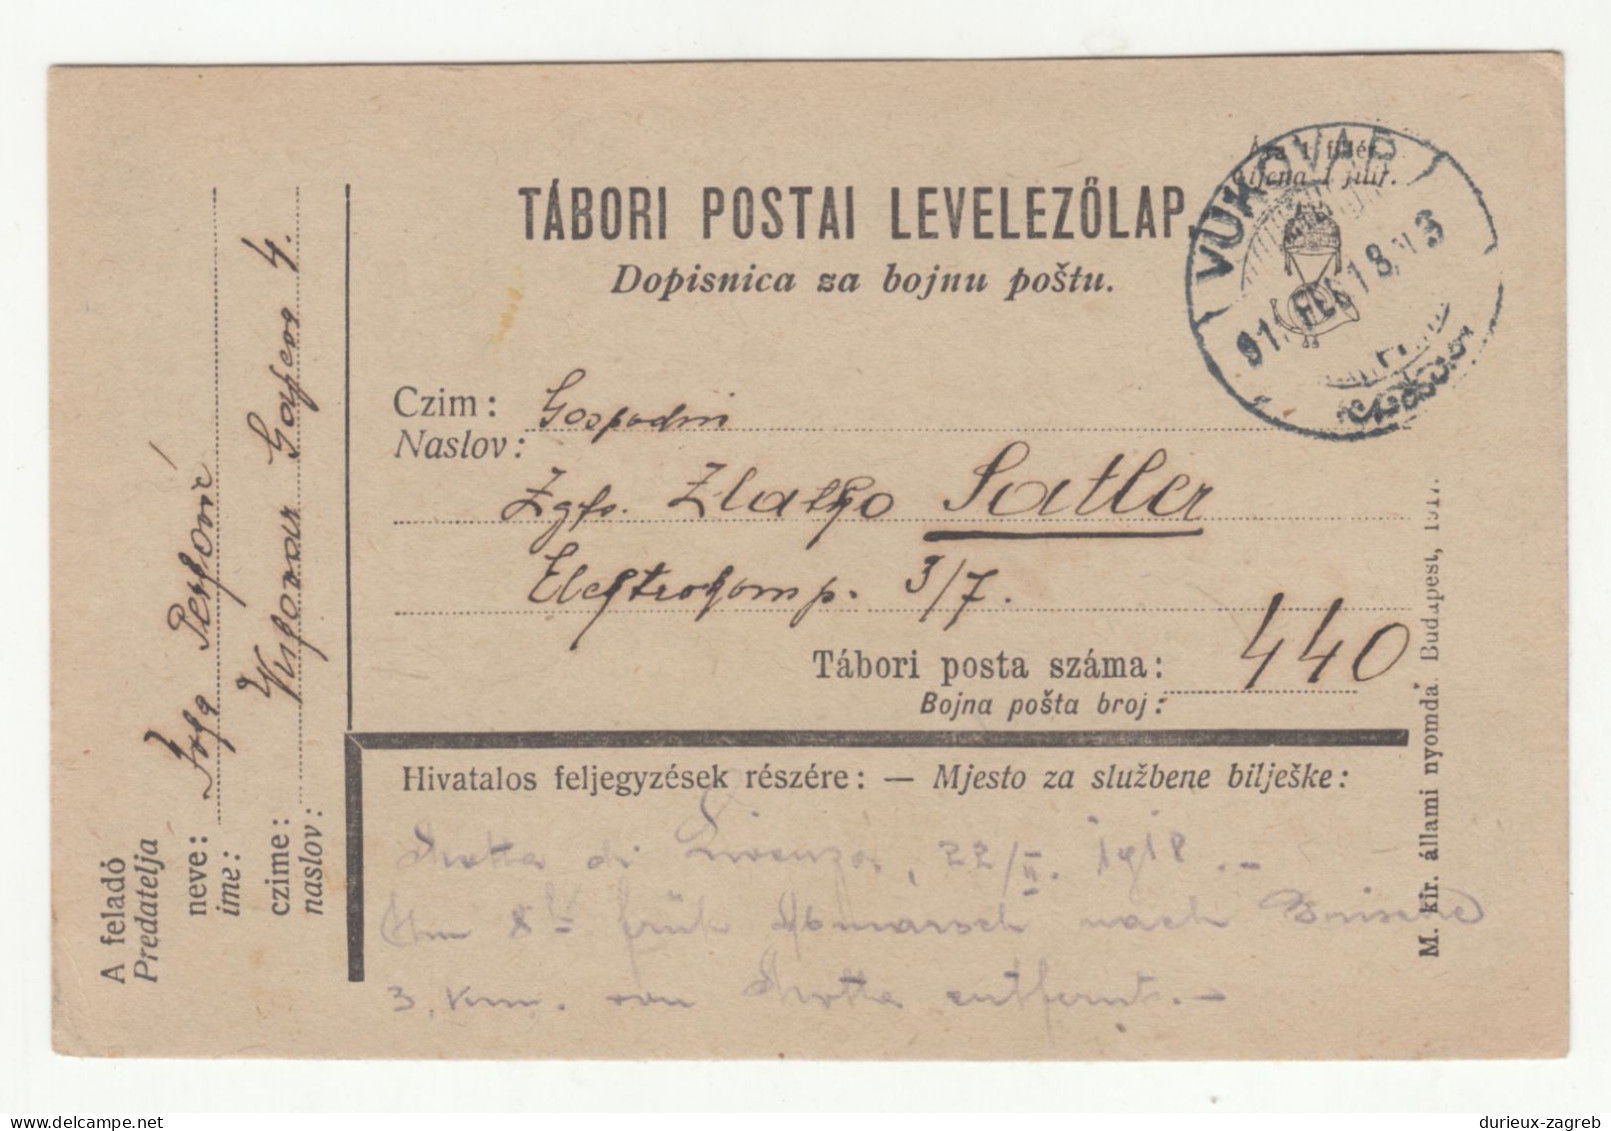 Hungary Croatia Postal Stationery Tabori Postai Levelezőlap Dopisnica Za Bojnu Poštu Posted 1918 Vukovar Pmk B240401 - Croatie